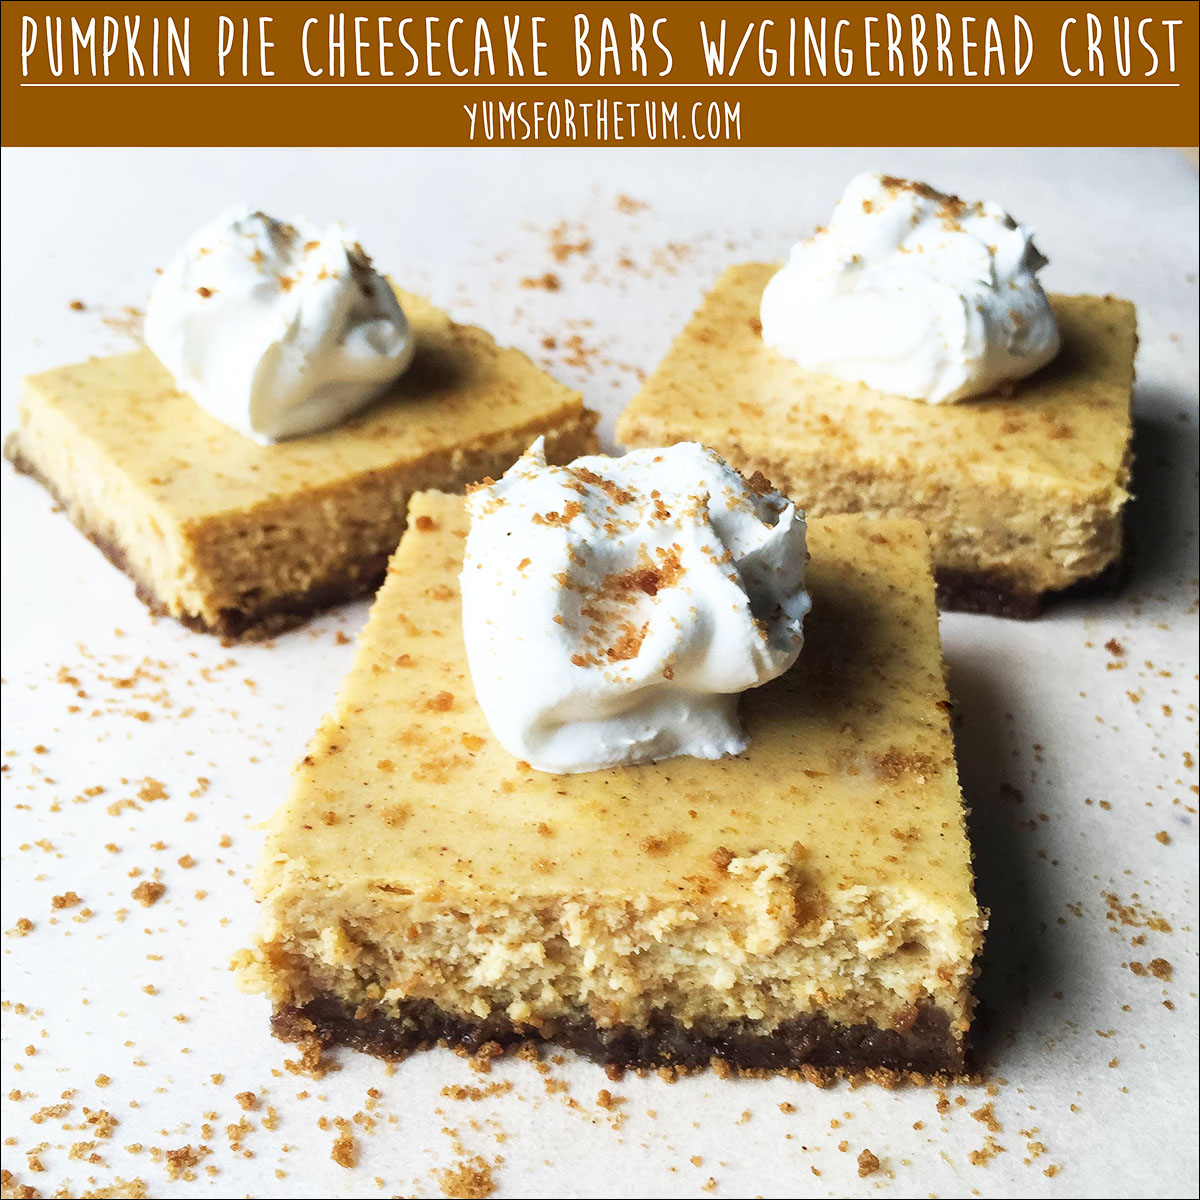 Pumpkin Pie Cheesecake Bars With Gingerbread Crust